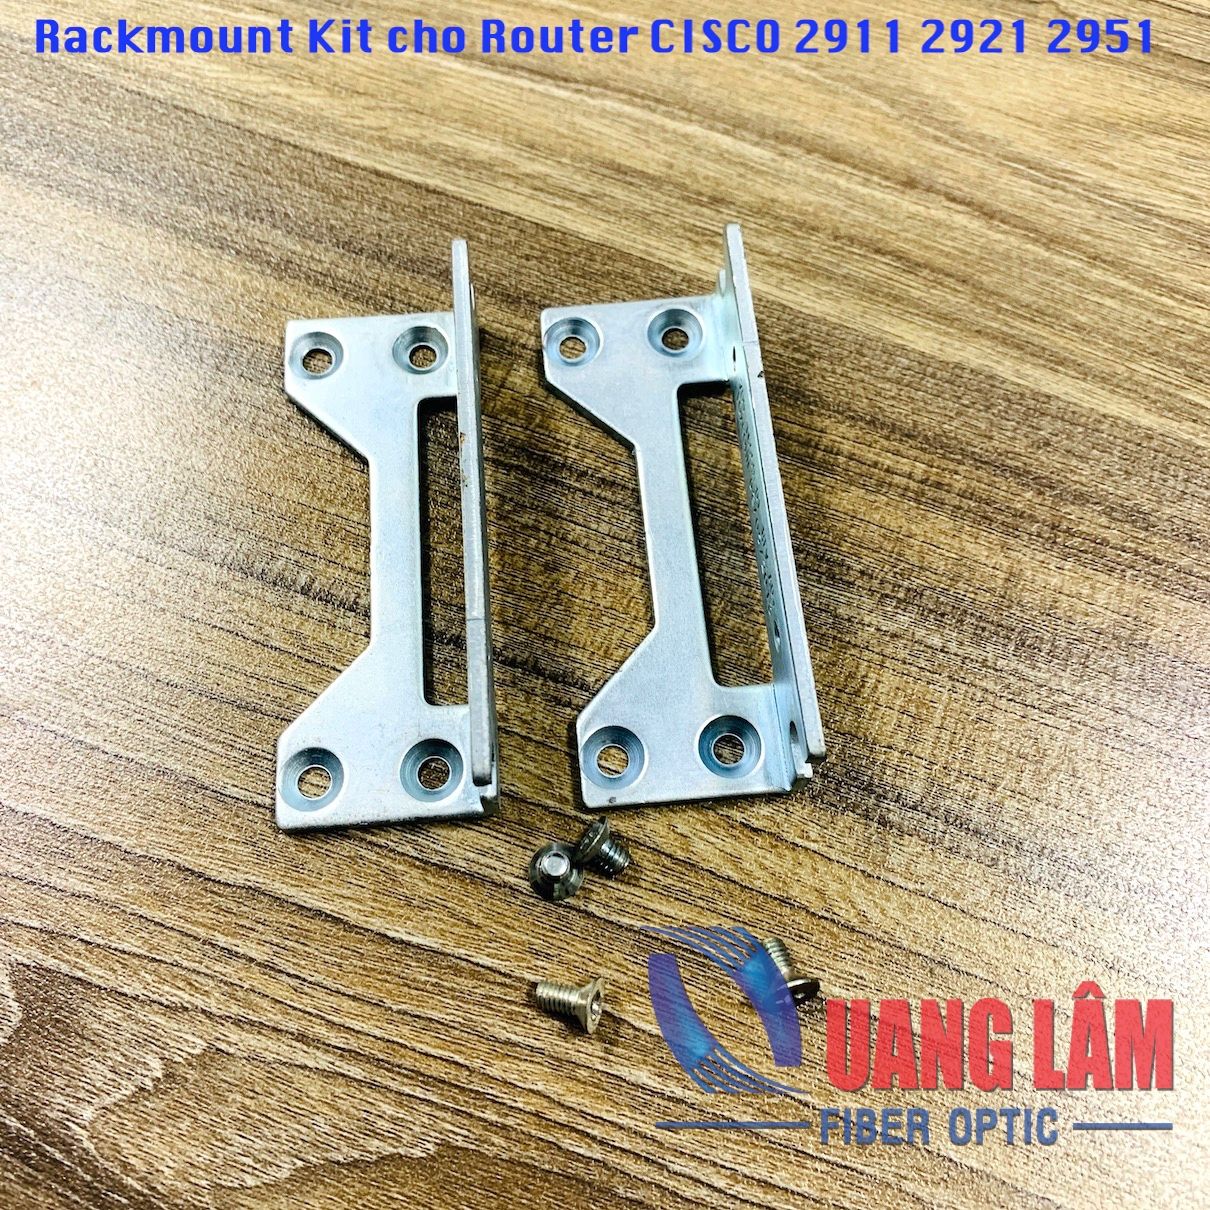 Rackmount Kit cho Router CISCO 2911 2921 2951